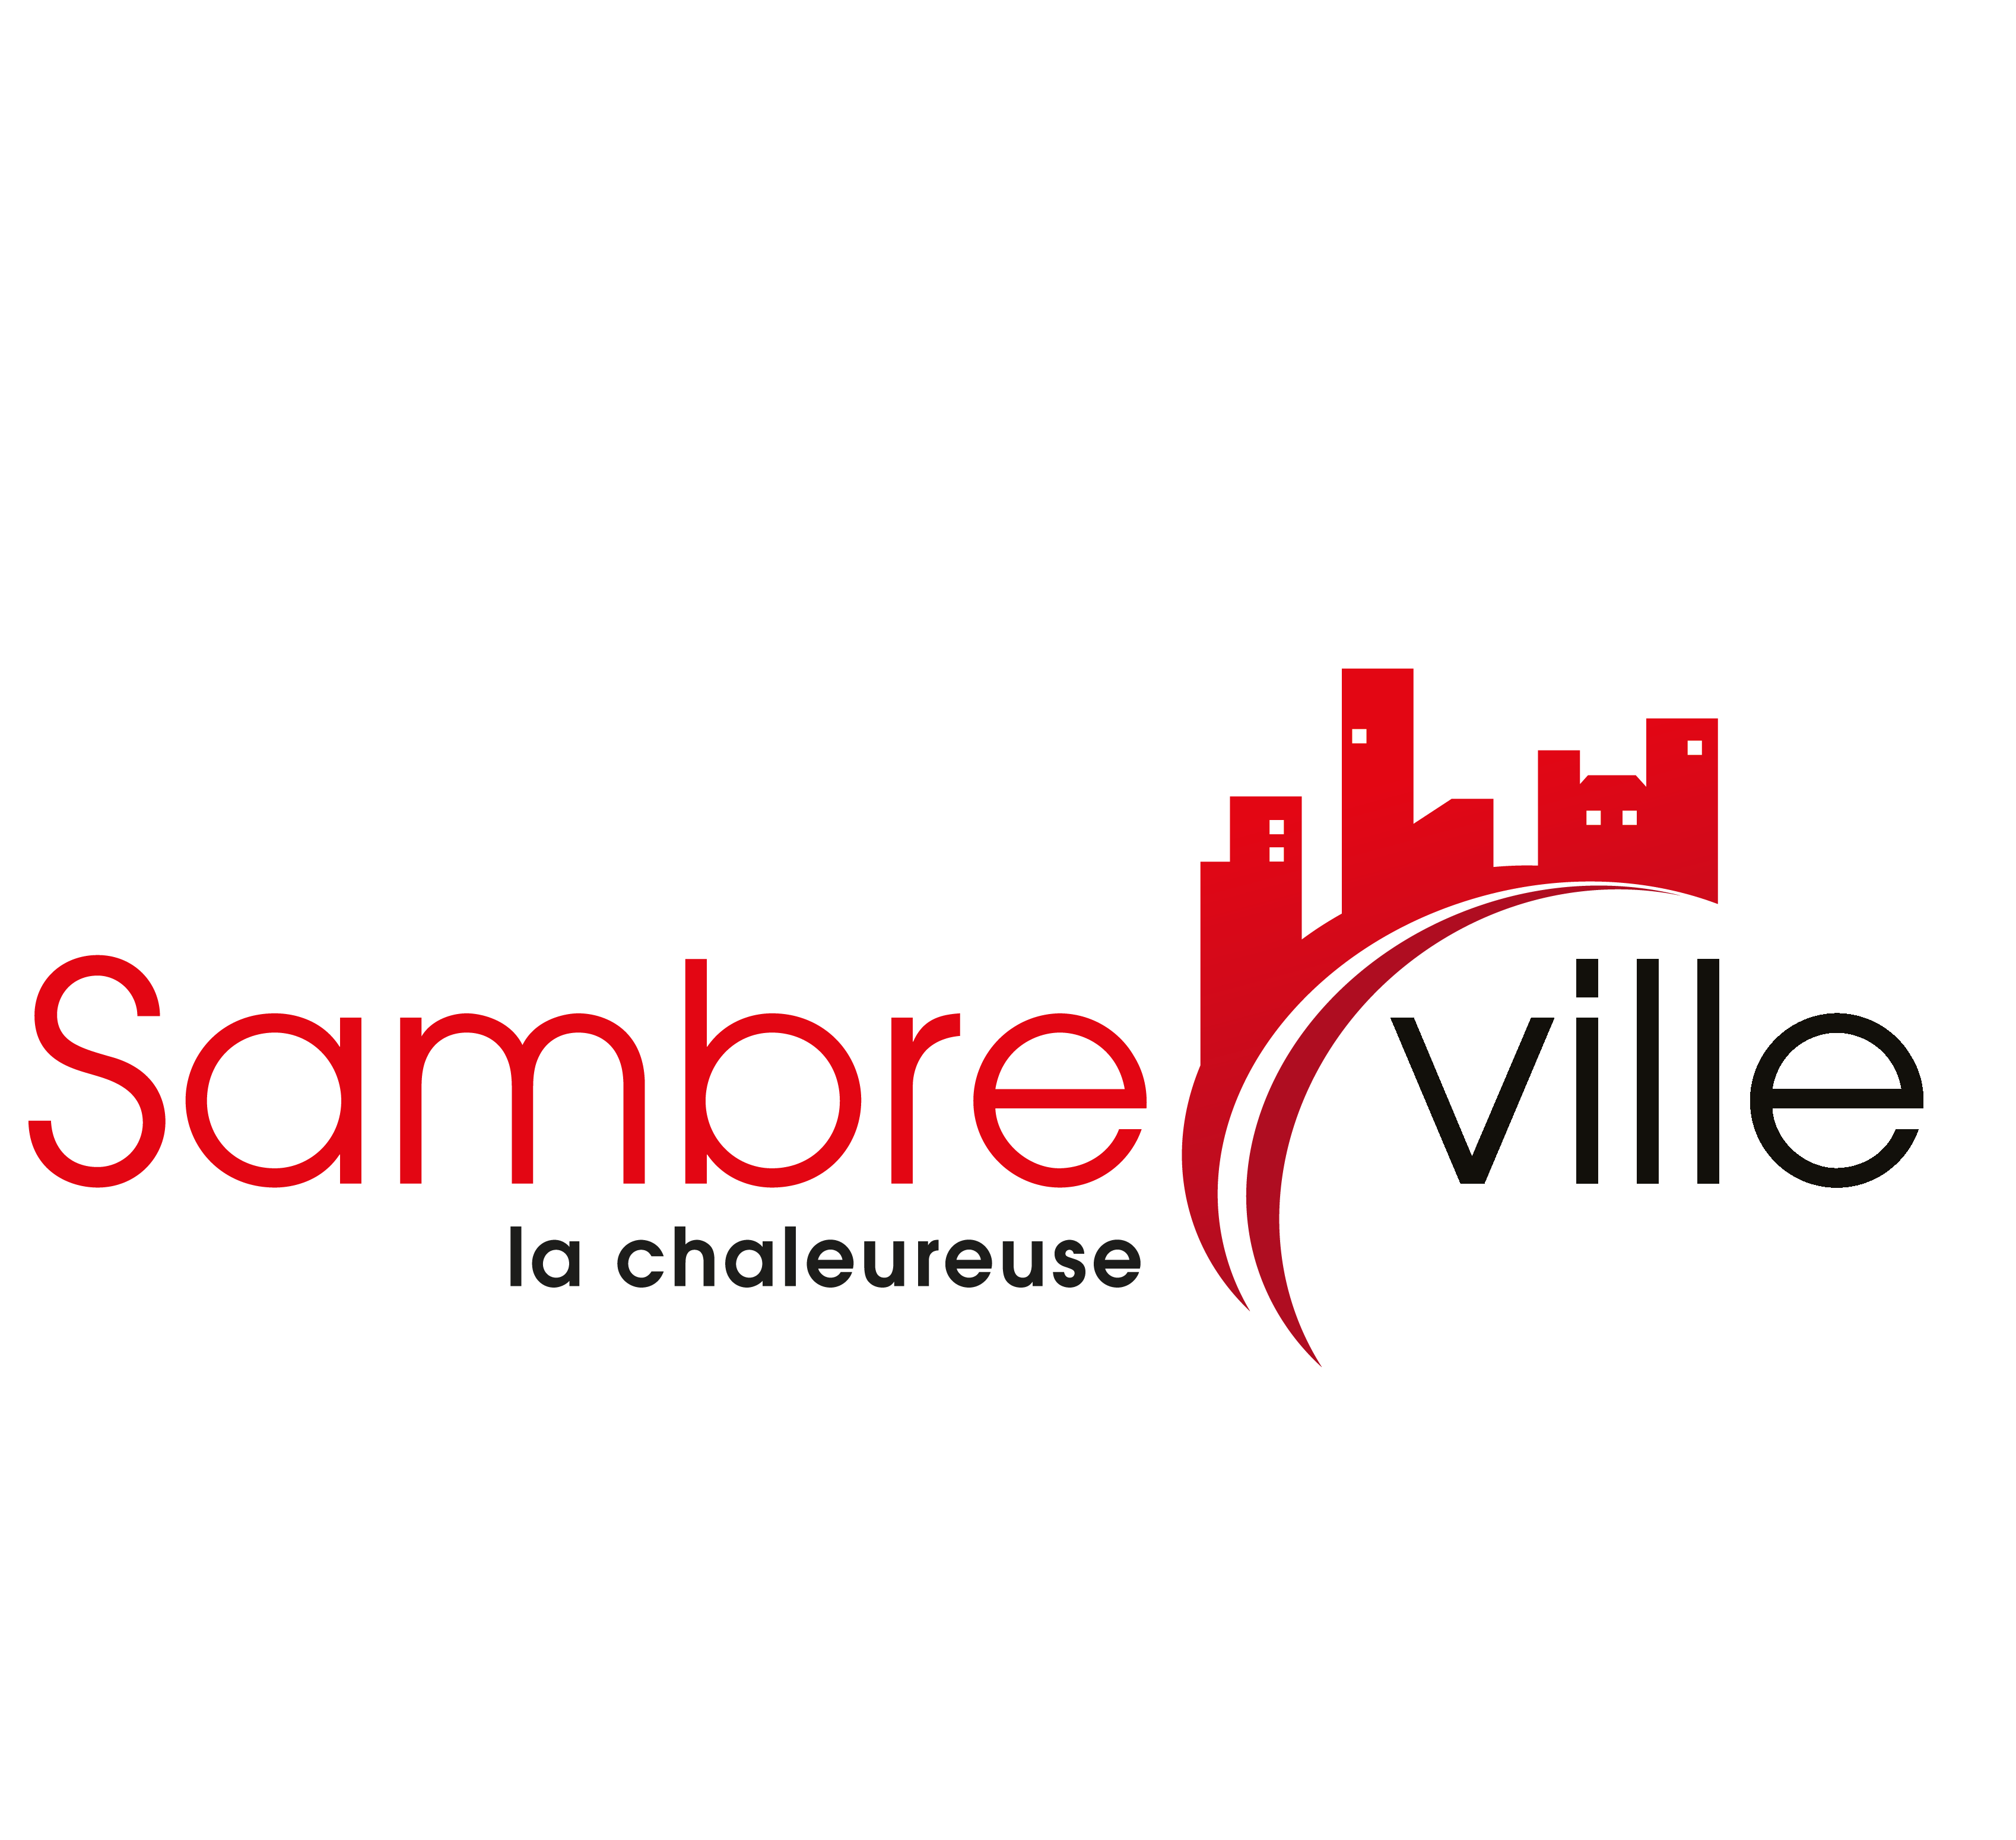 Sambreville